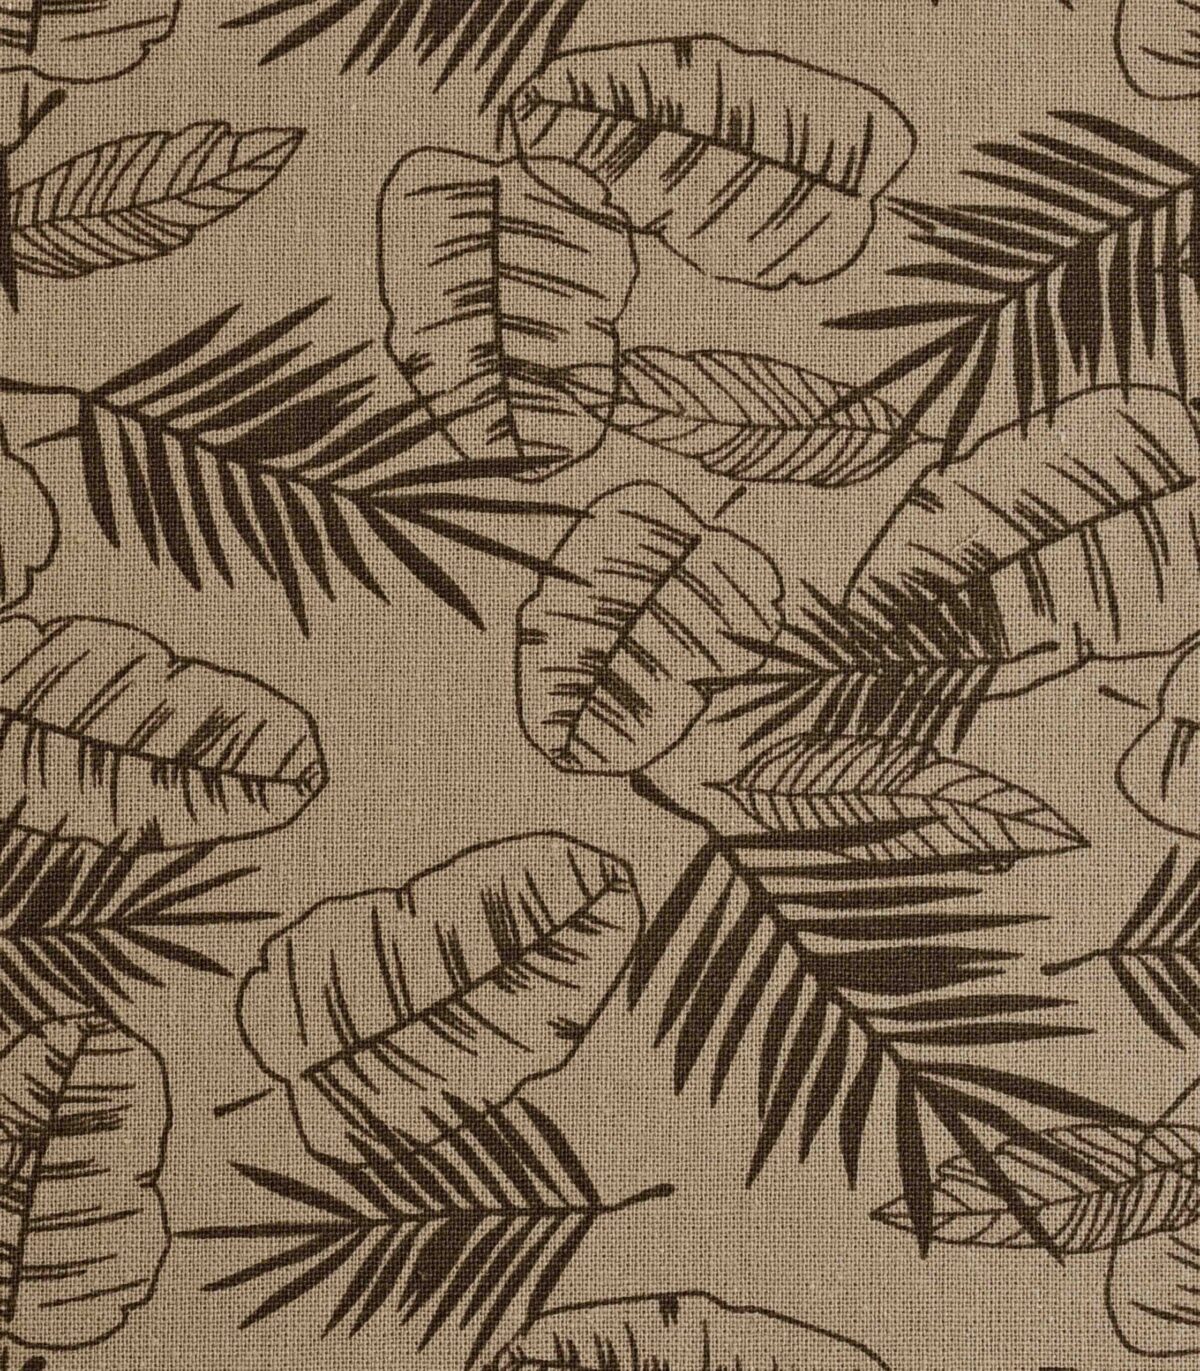 Cotton Khaki Color Leaf Print Woven Fabric